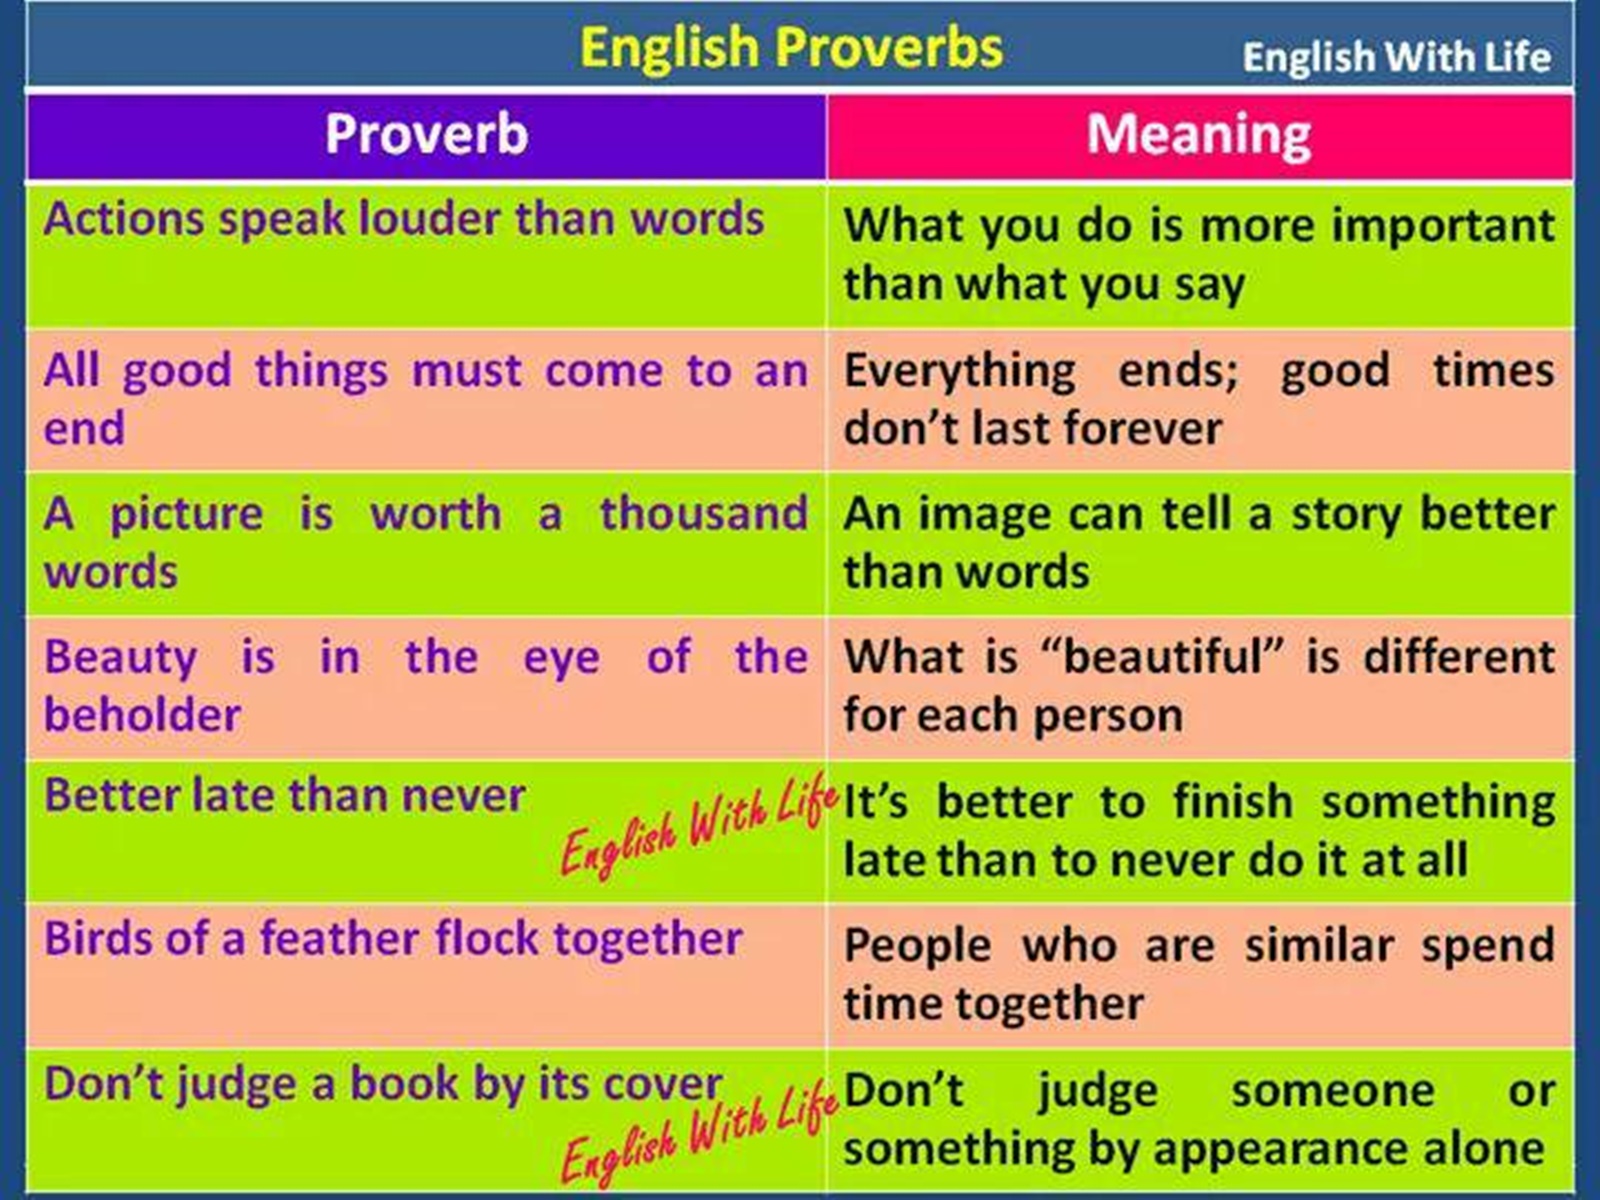 Proverb перевод. Английские пословицы. English Proverbs. Английские пословицы и поговорки. Пословицы на английском языке.